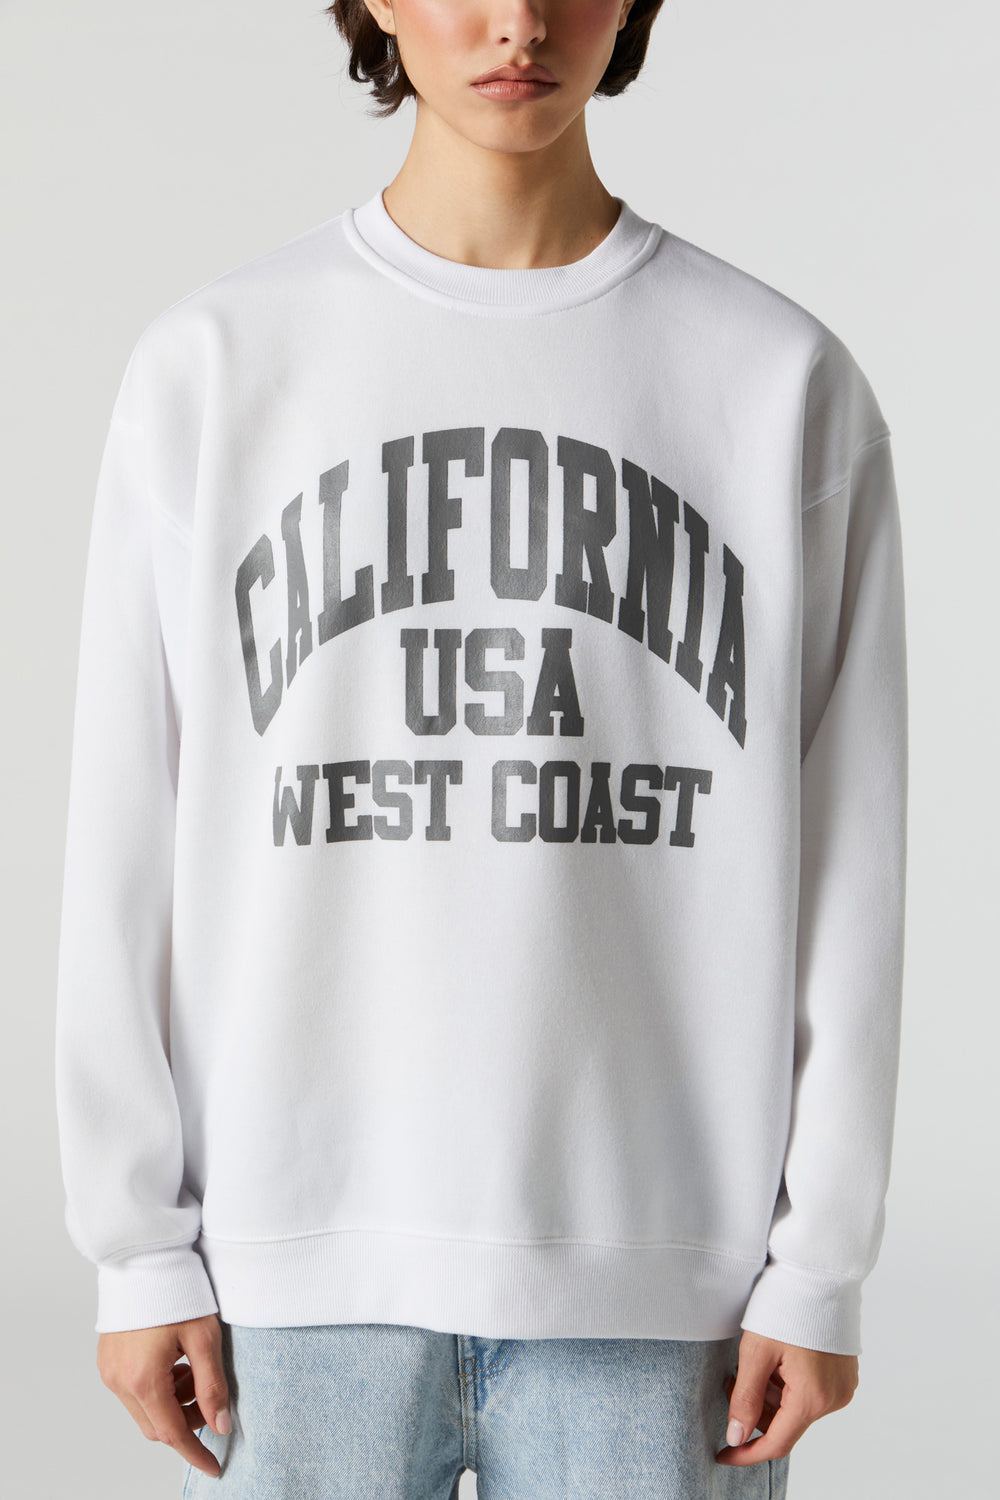 California Graphic Fleece Sweatshirt California Graphic Fleece Sweatshirt 2